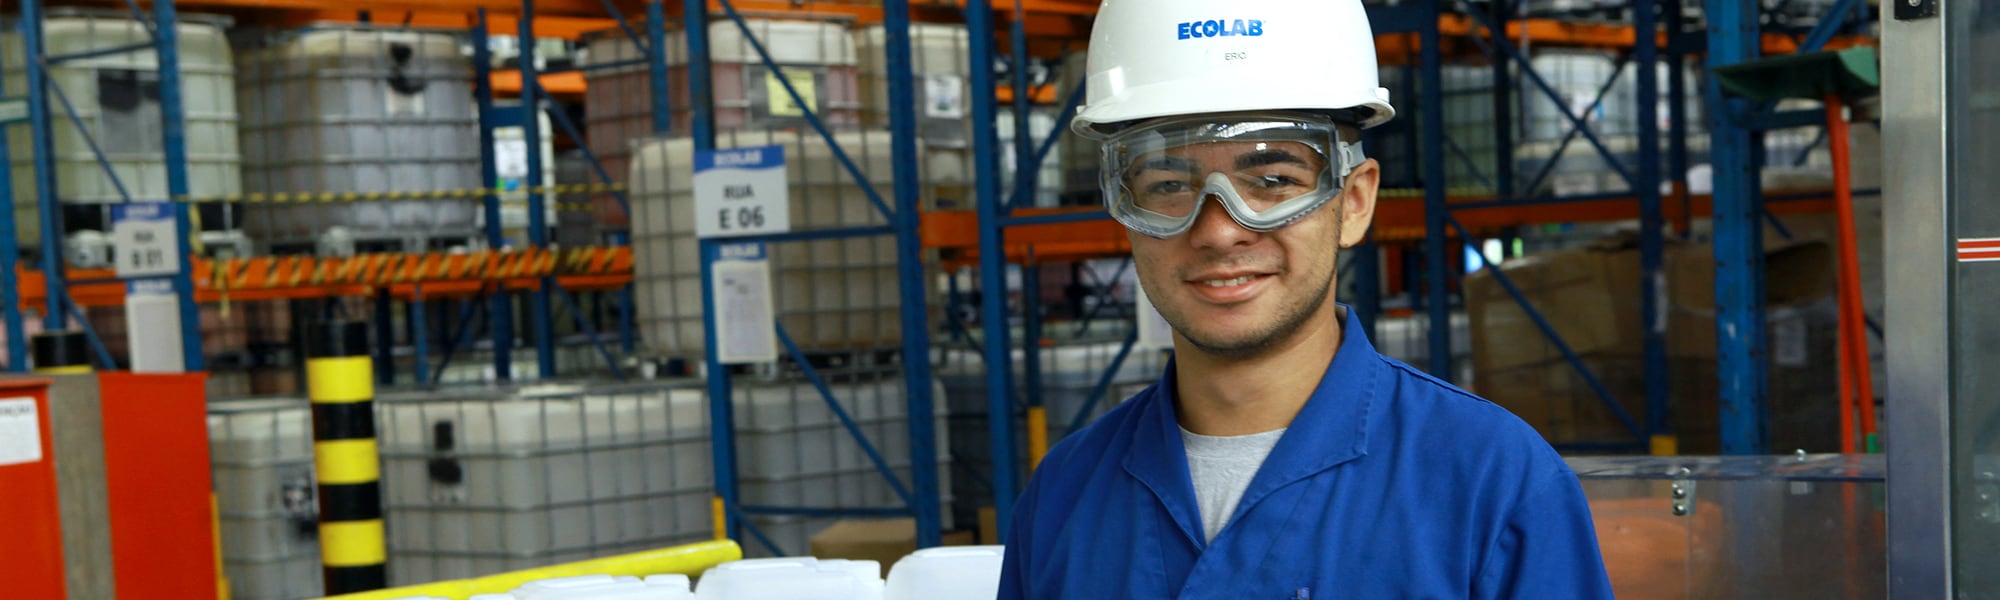 Employee at Ecolab’s Barueri, Brazil Plant